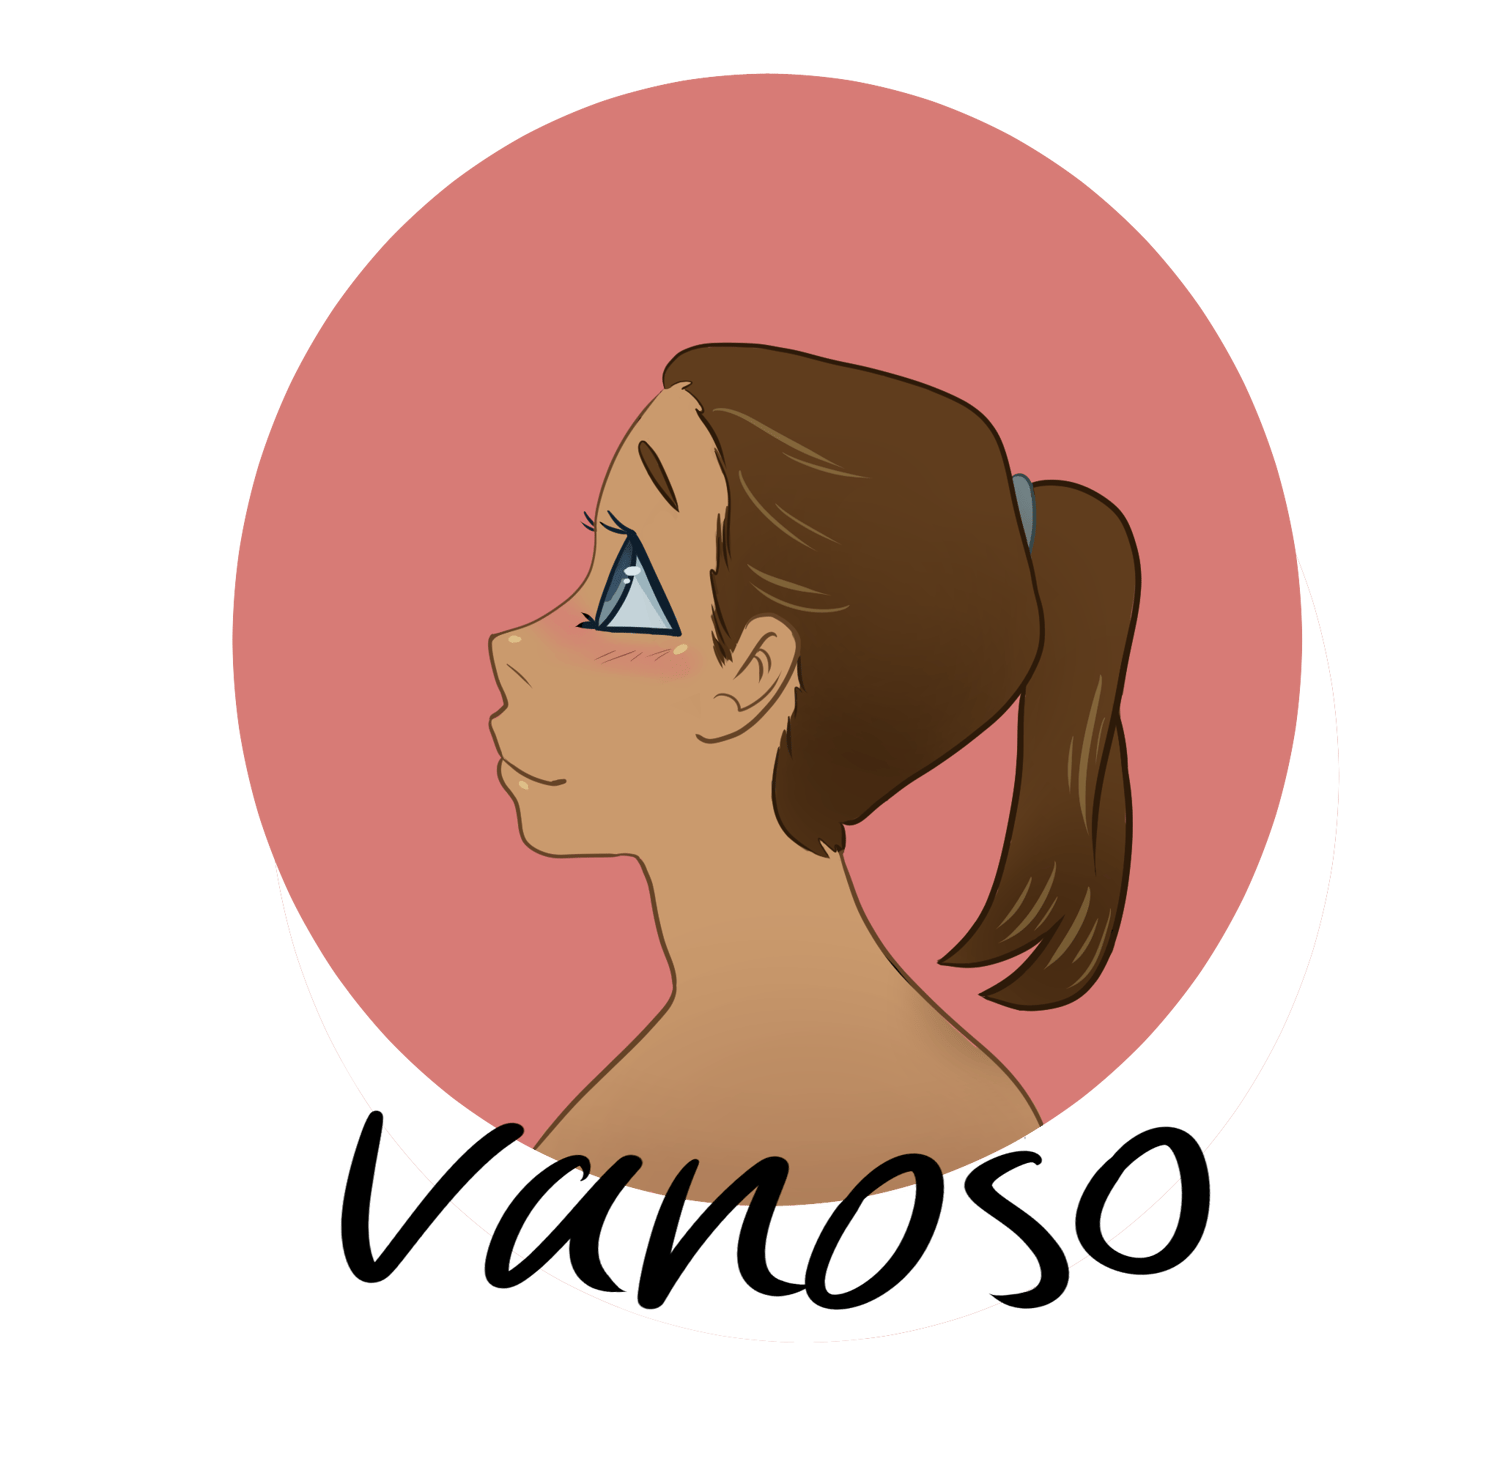 Vanoso Illustration